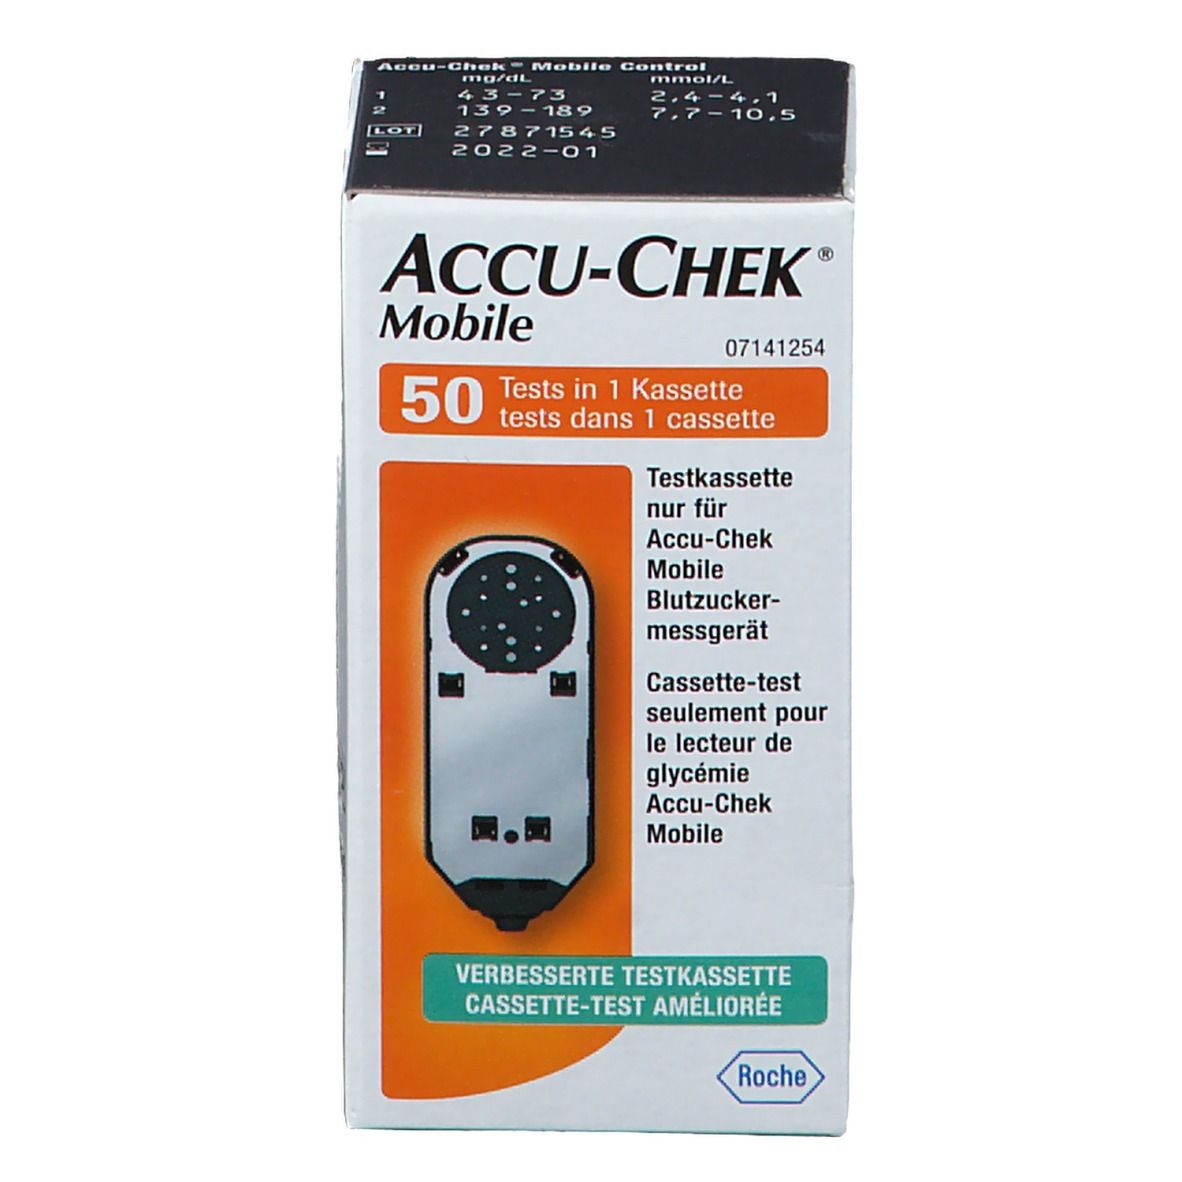 ACCU-CHEK® Mobile Cassette